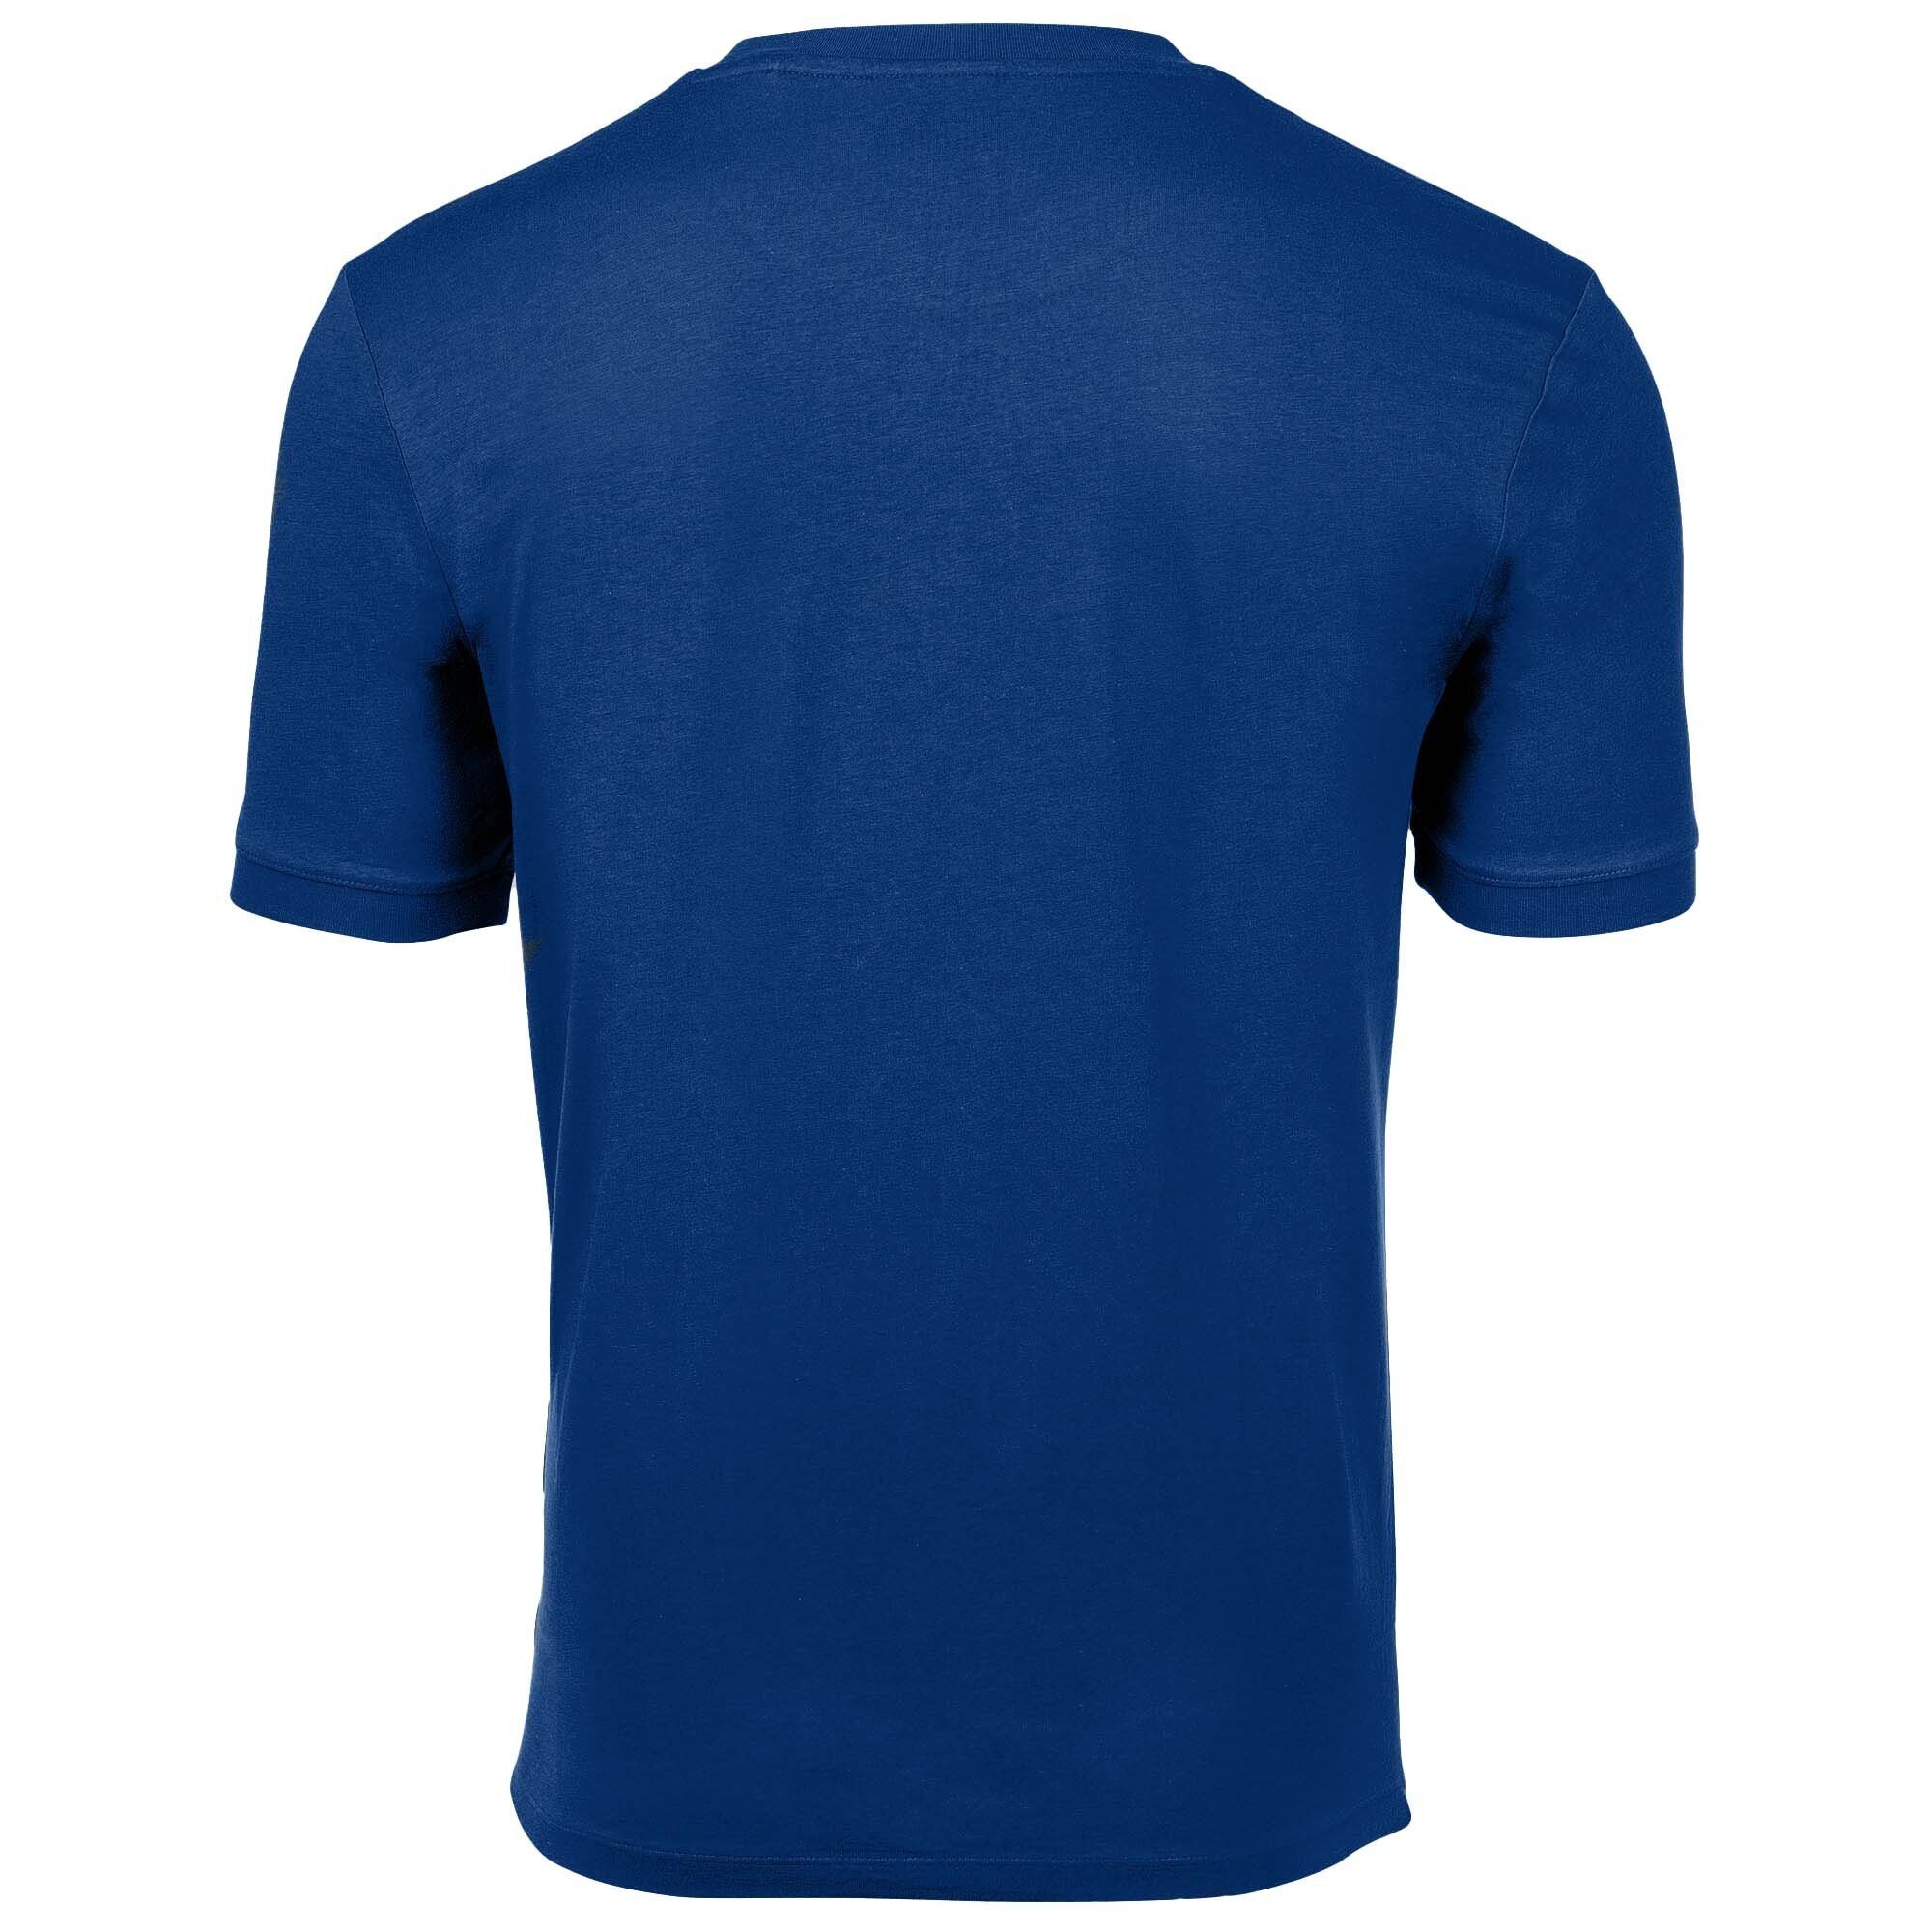 HUGO Herren Blue) T-Shirt Blau - (Medium Diragolino212 Rundhals T-Shirt